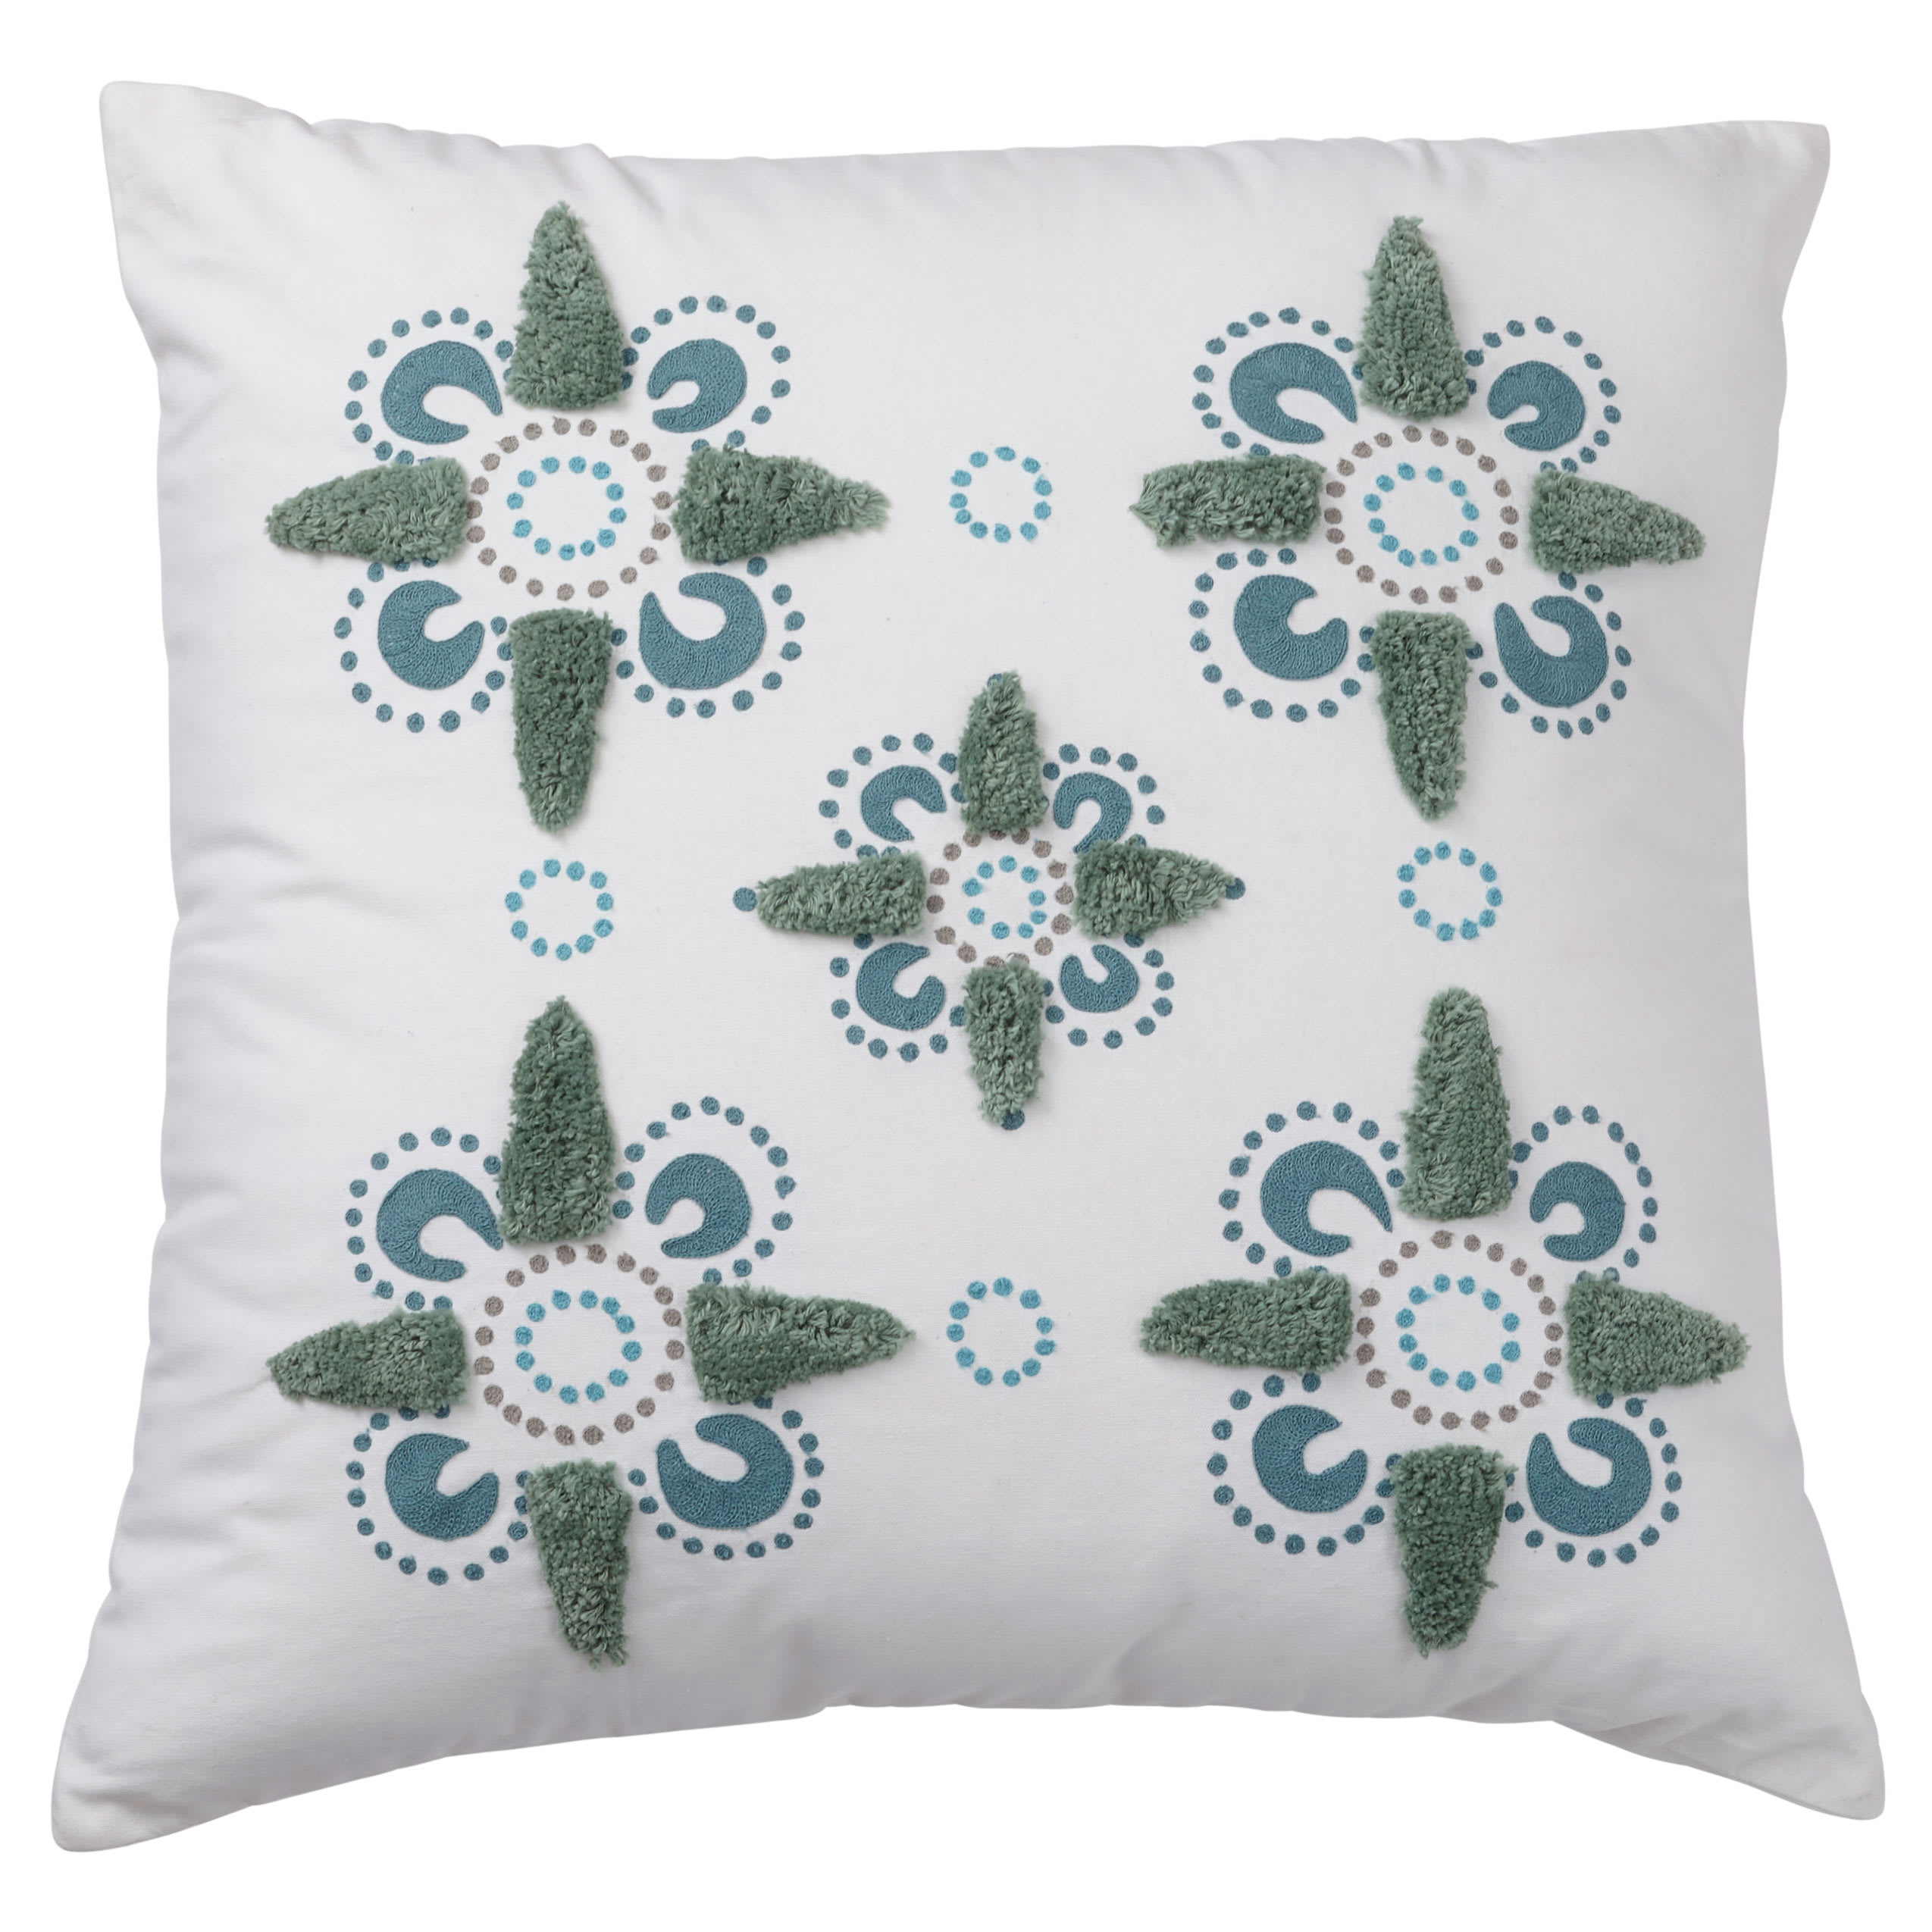 Cstudio Home Whistler Decorative Pillow Cover - Floral